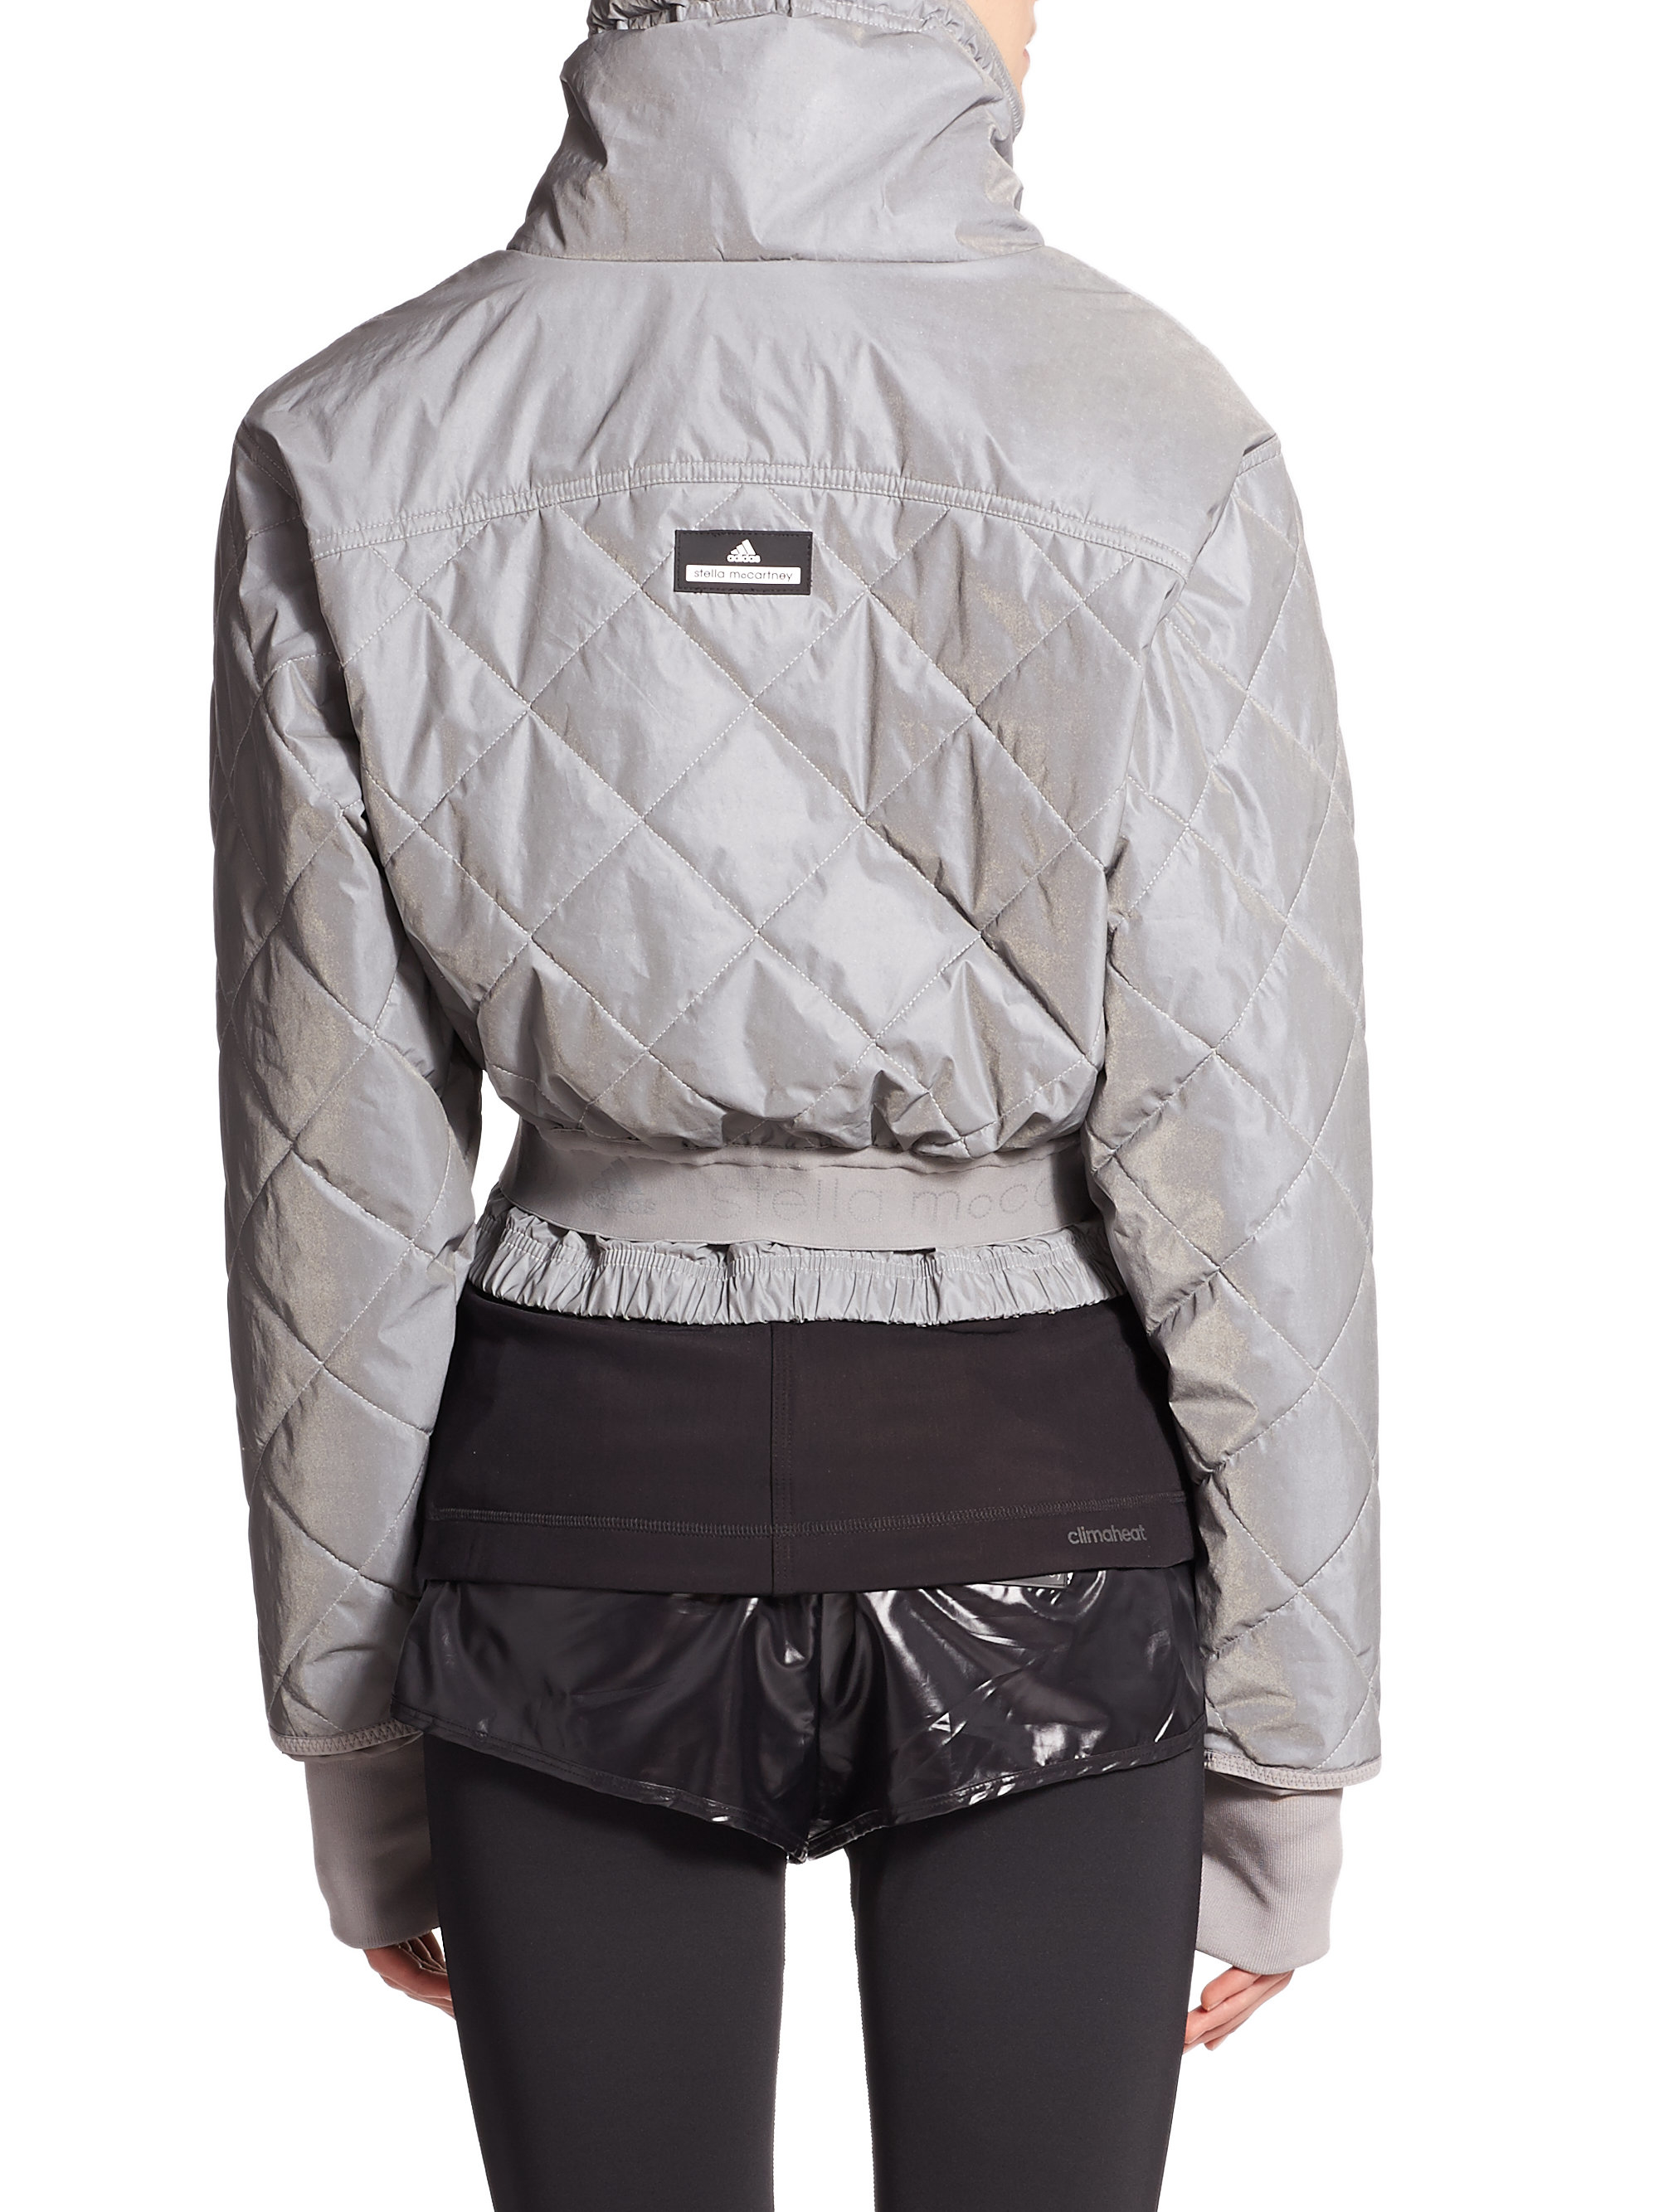 Lyst - Adidas By Stella Mccartney Cropped Puffer Jacket in Metallic